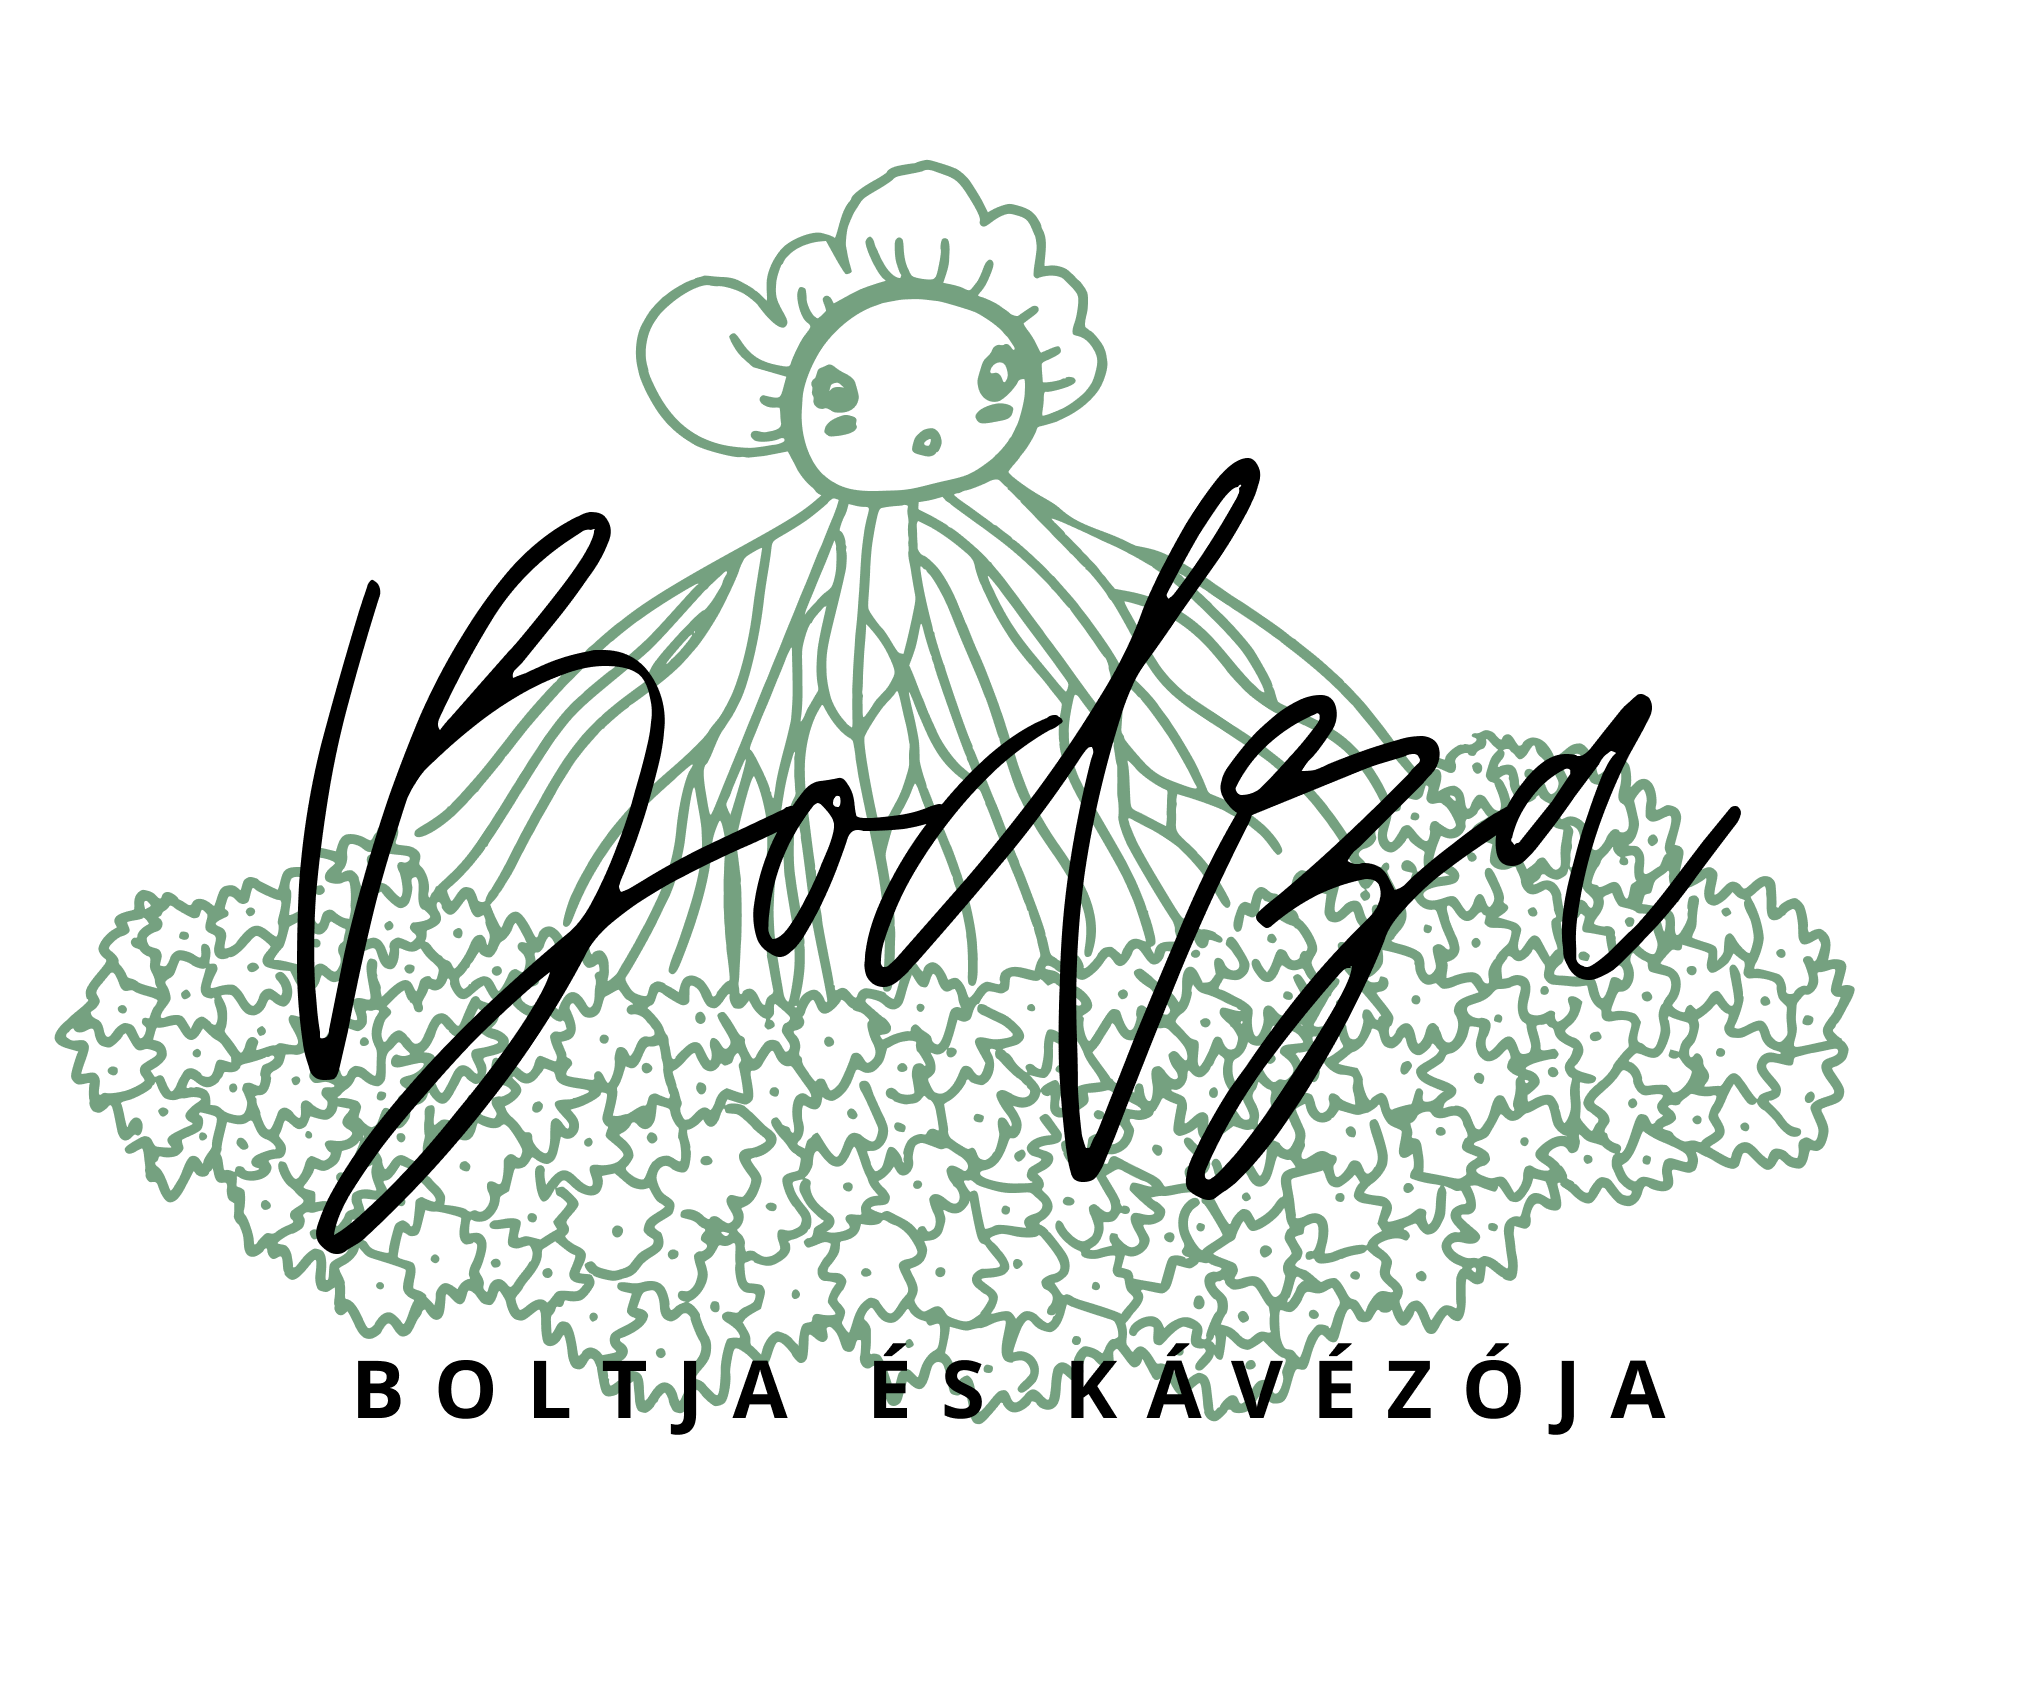 Rajzolt bodzavirág